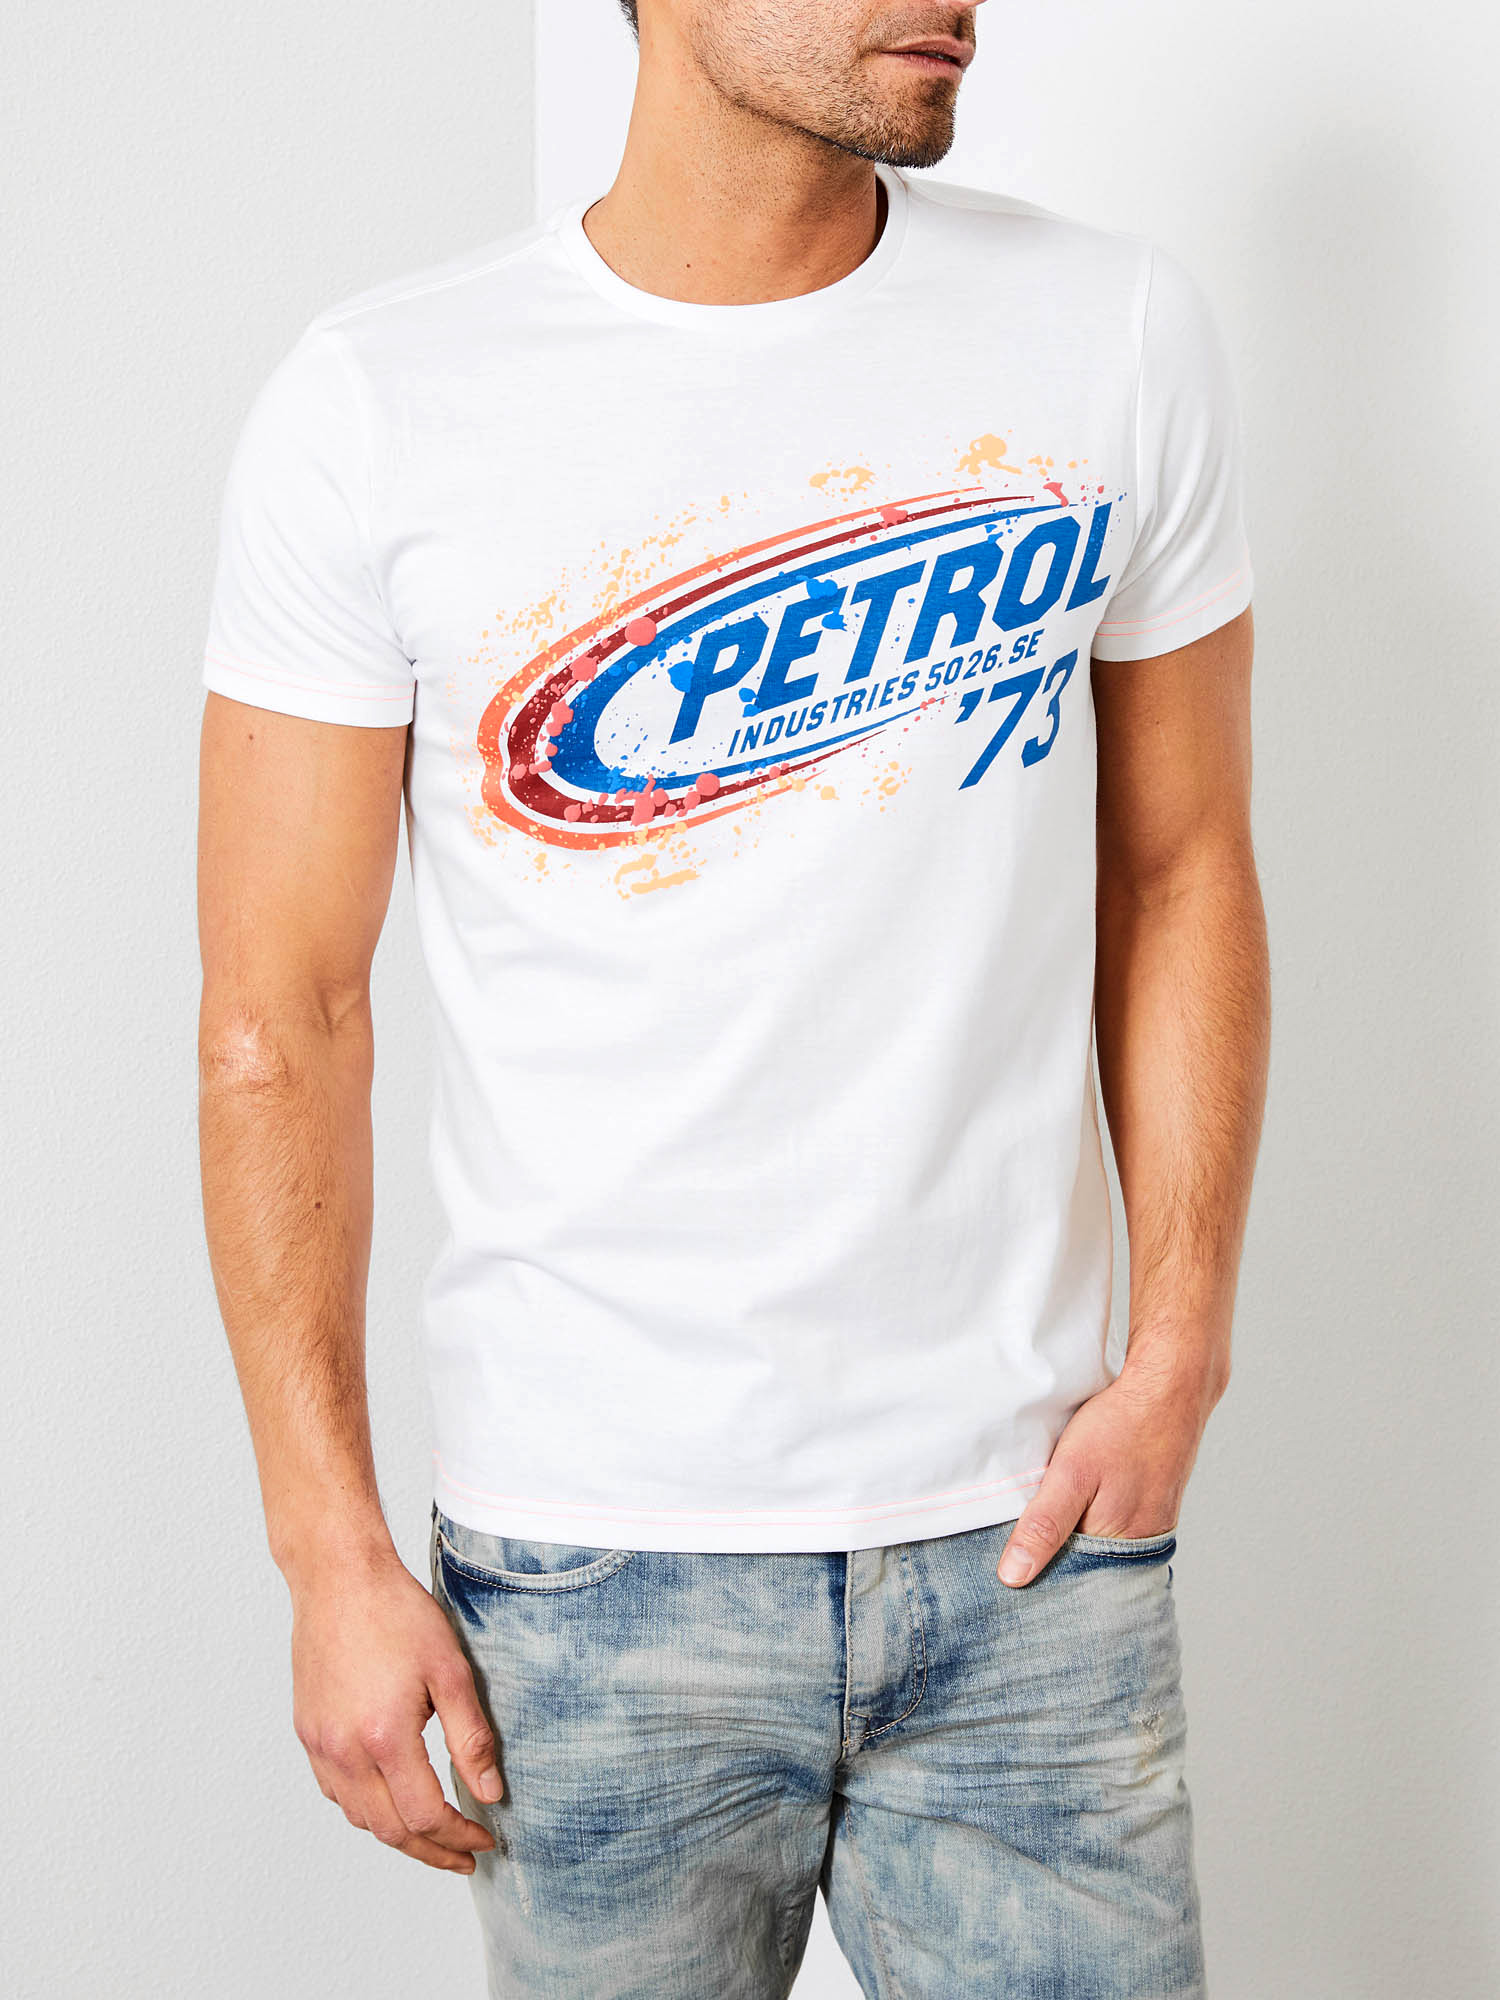 White Industries J Petrol Menswear Style Bright Artwork - T-shirt